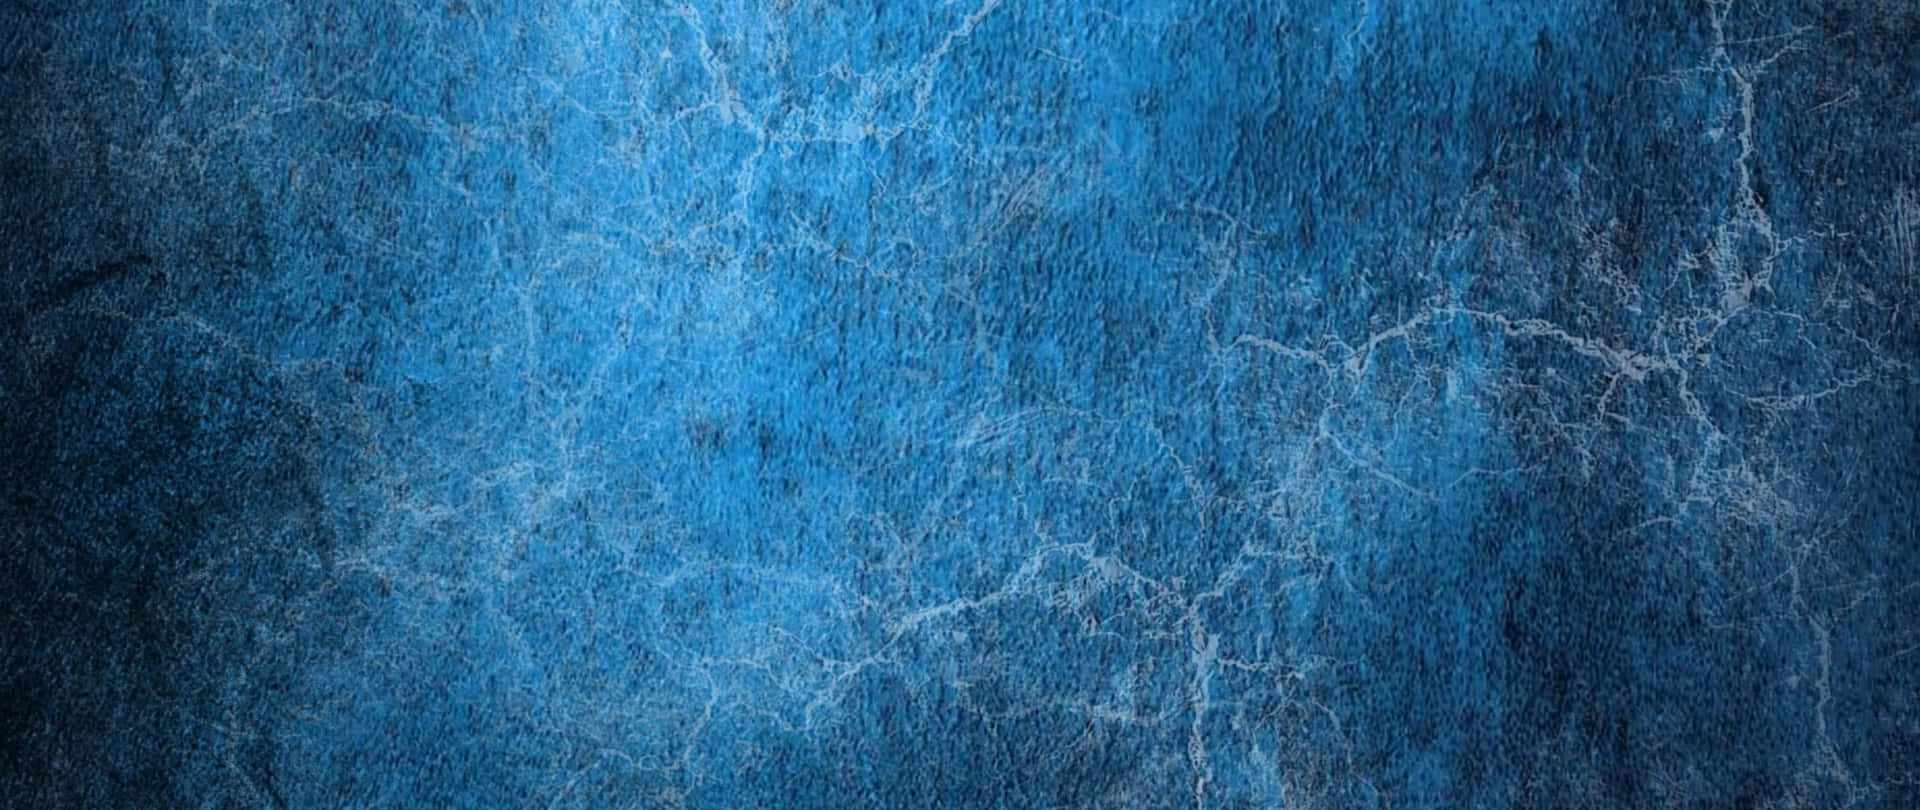 Blue Grunge Texture Background Stock Photo Wallpaper